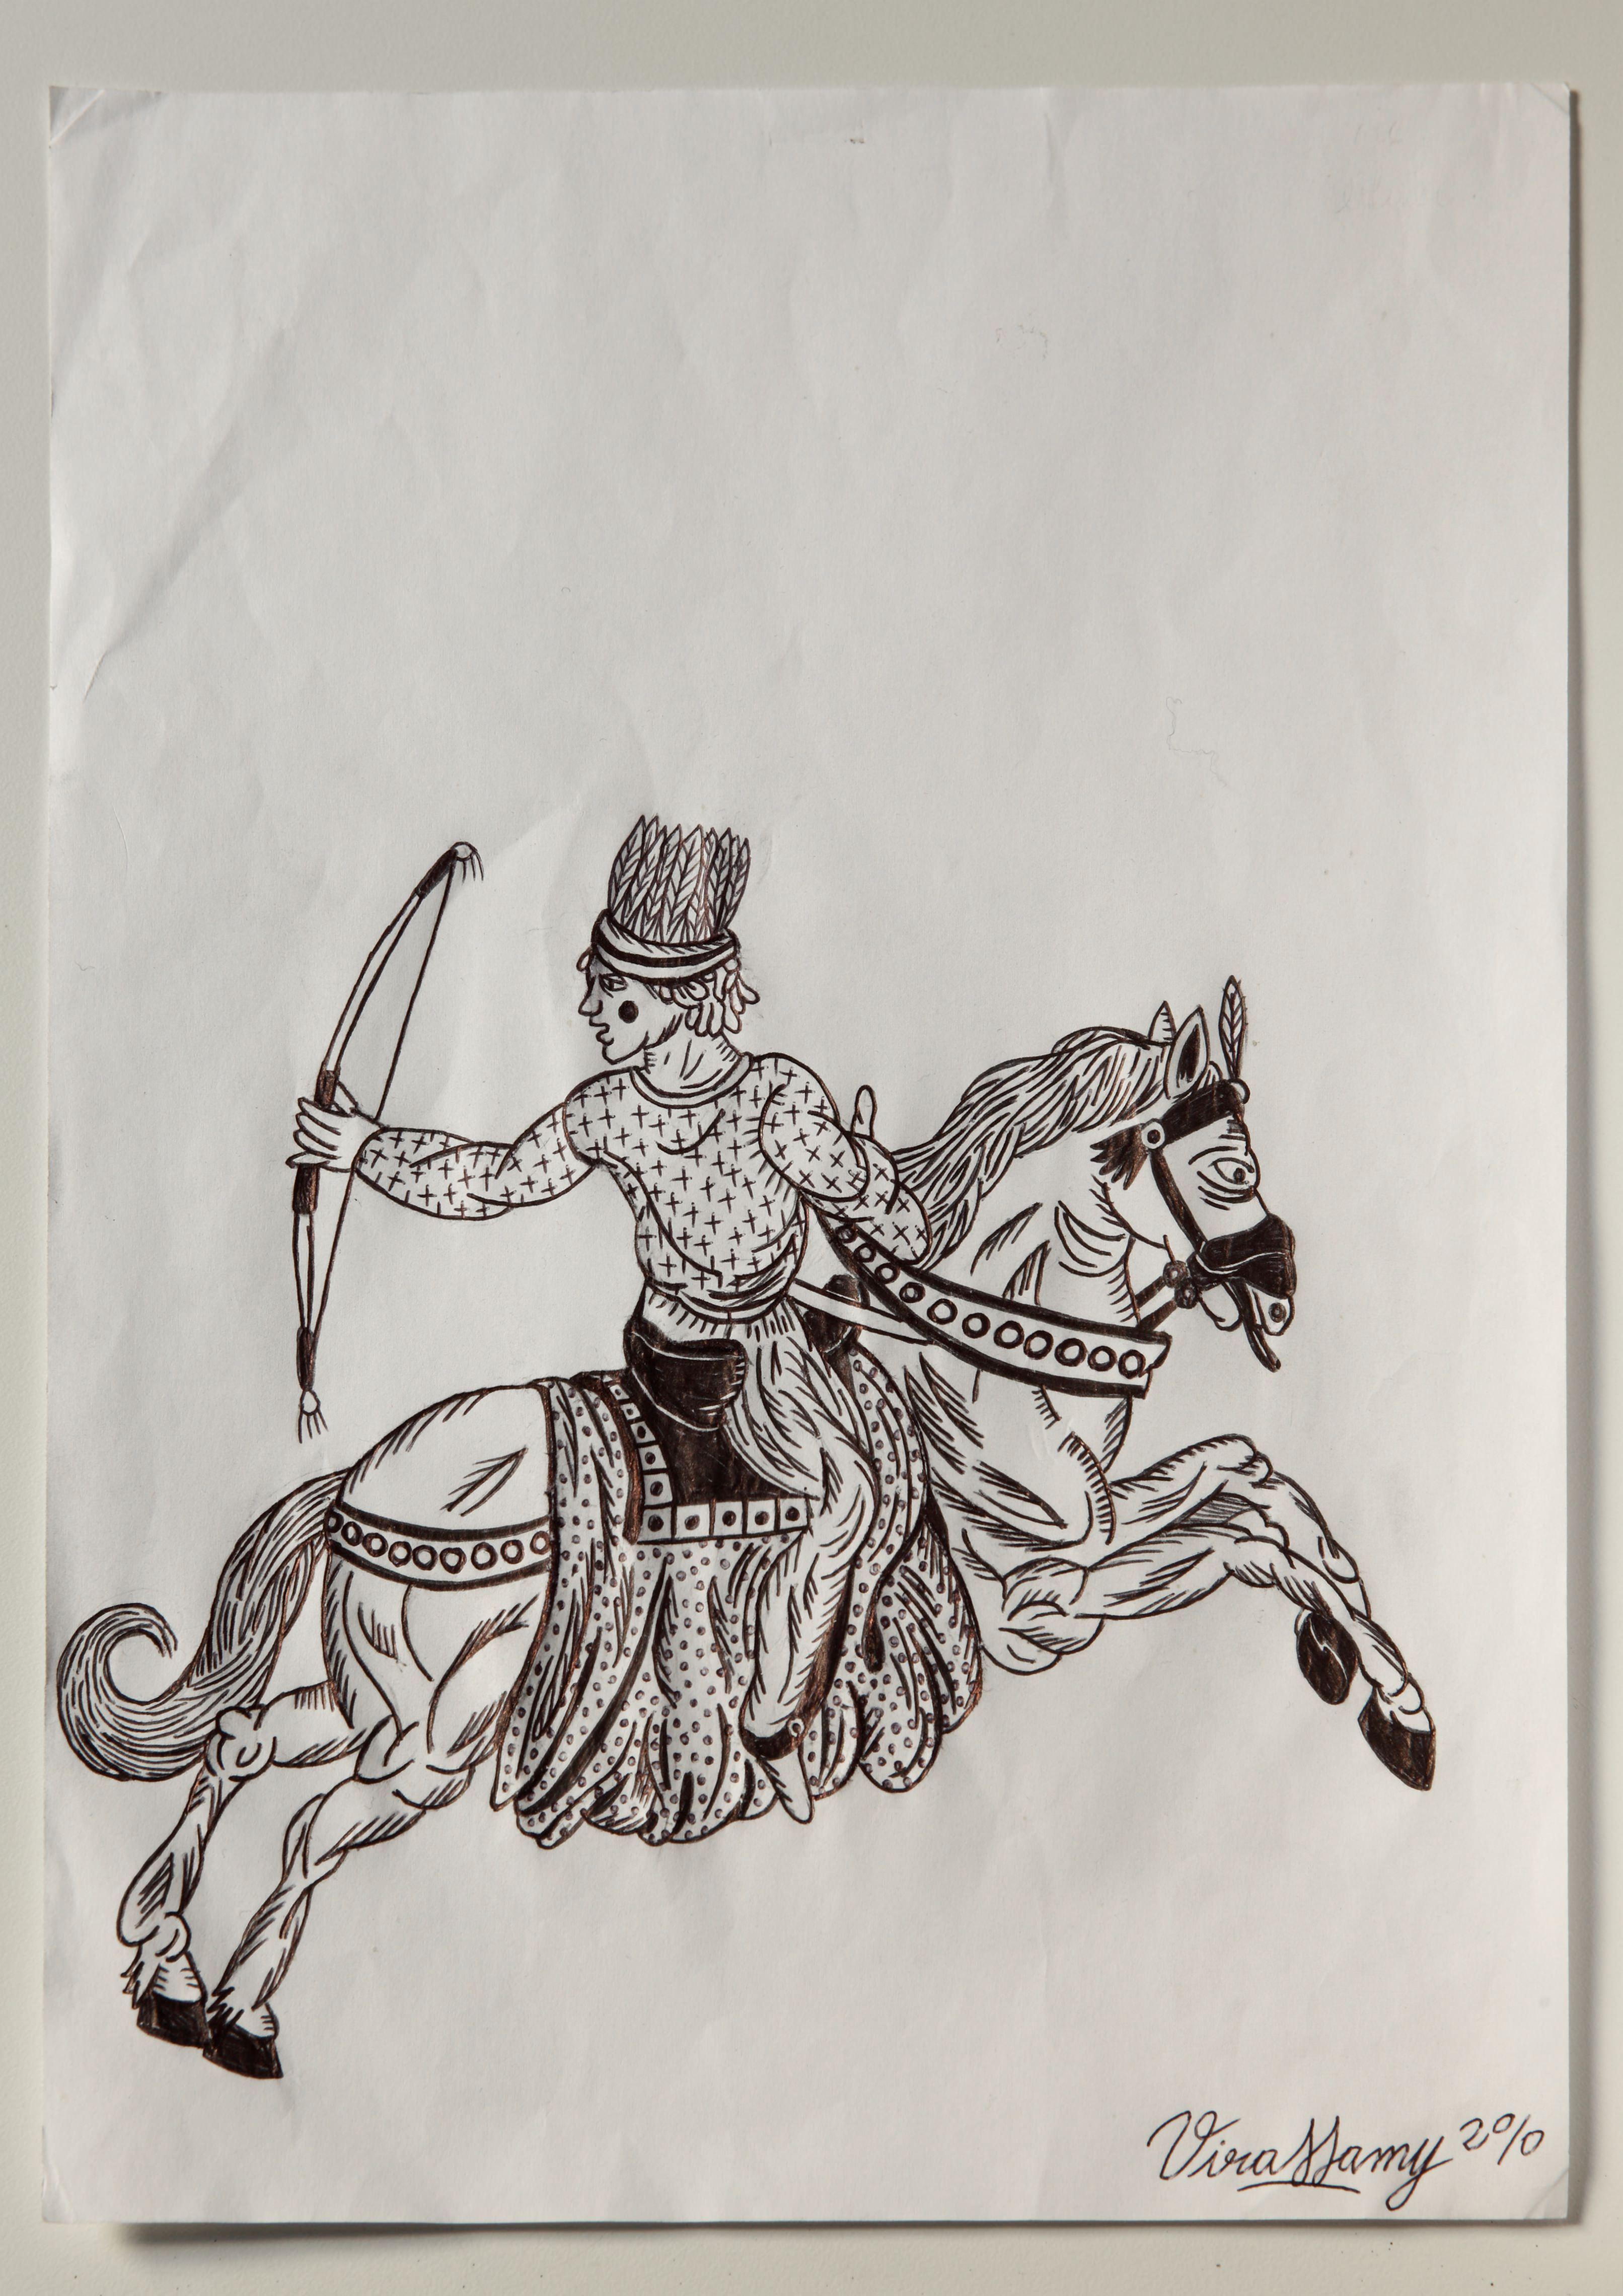 Untitled (4 horsemen drawings)